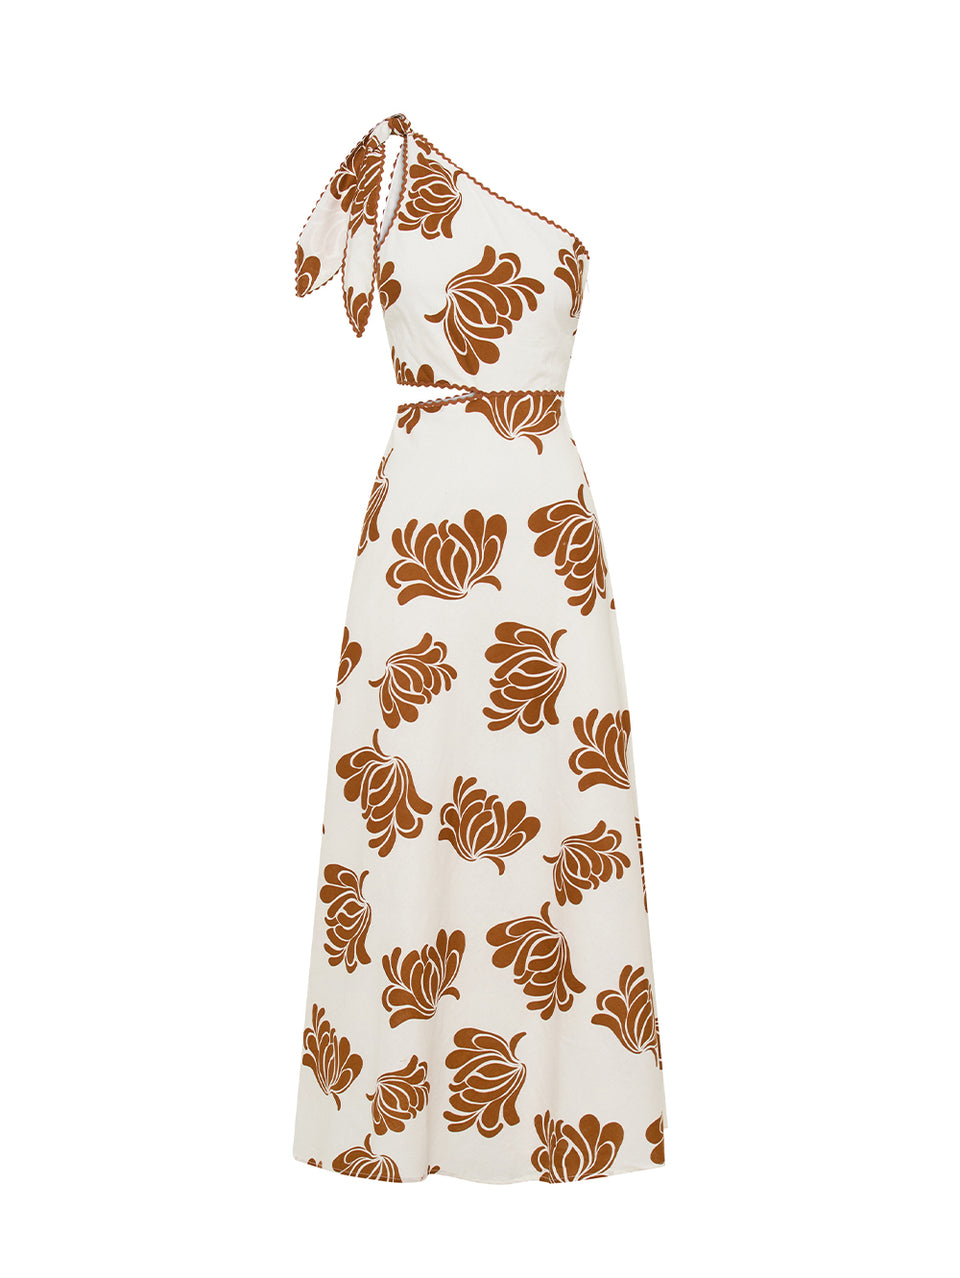 Inza Maxi Dress KIVARI | Ivory and brown maxi dress